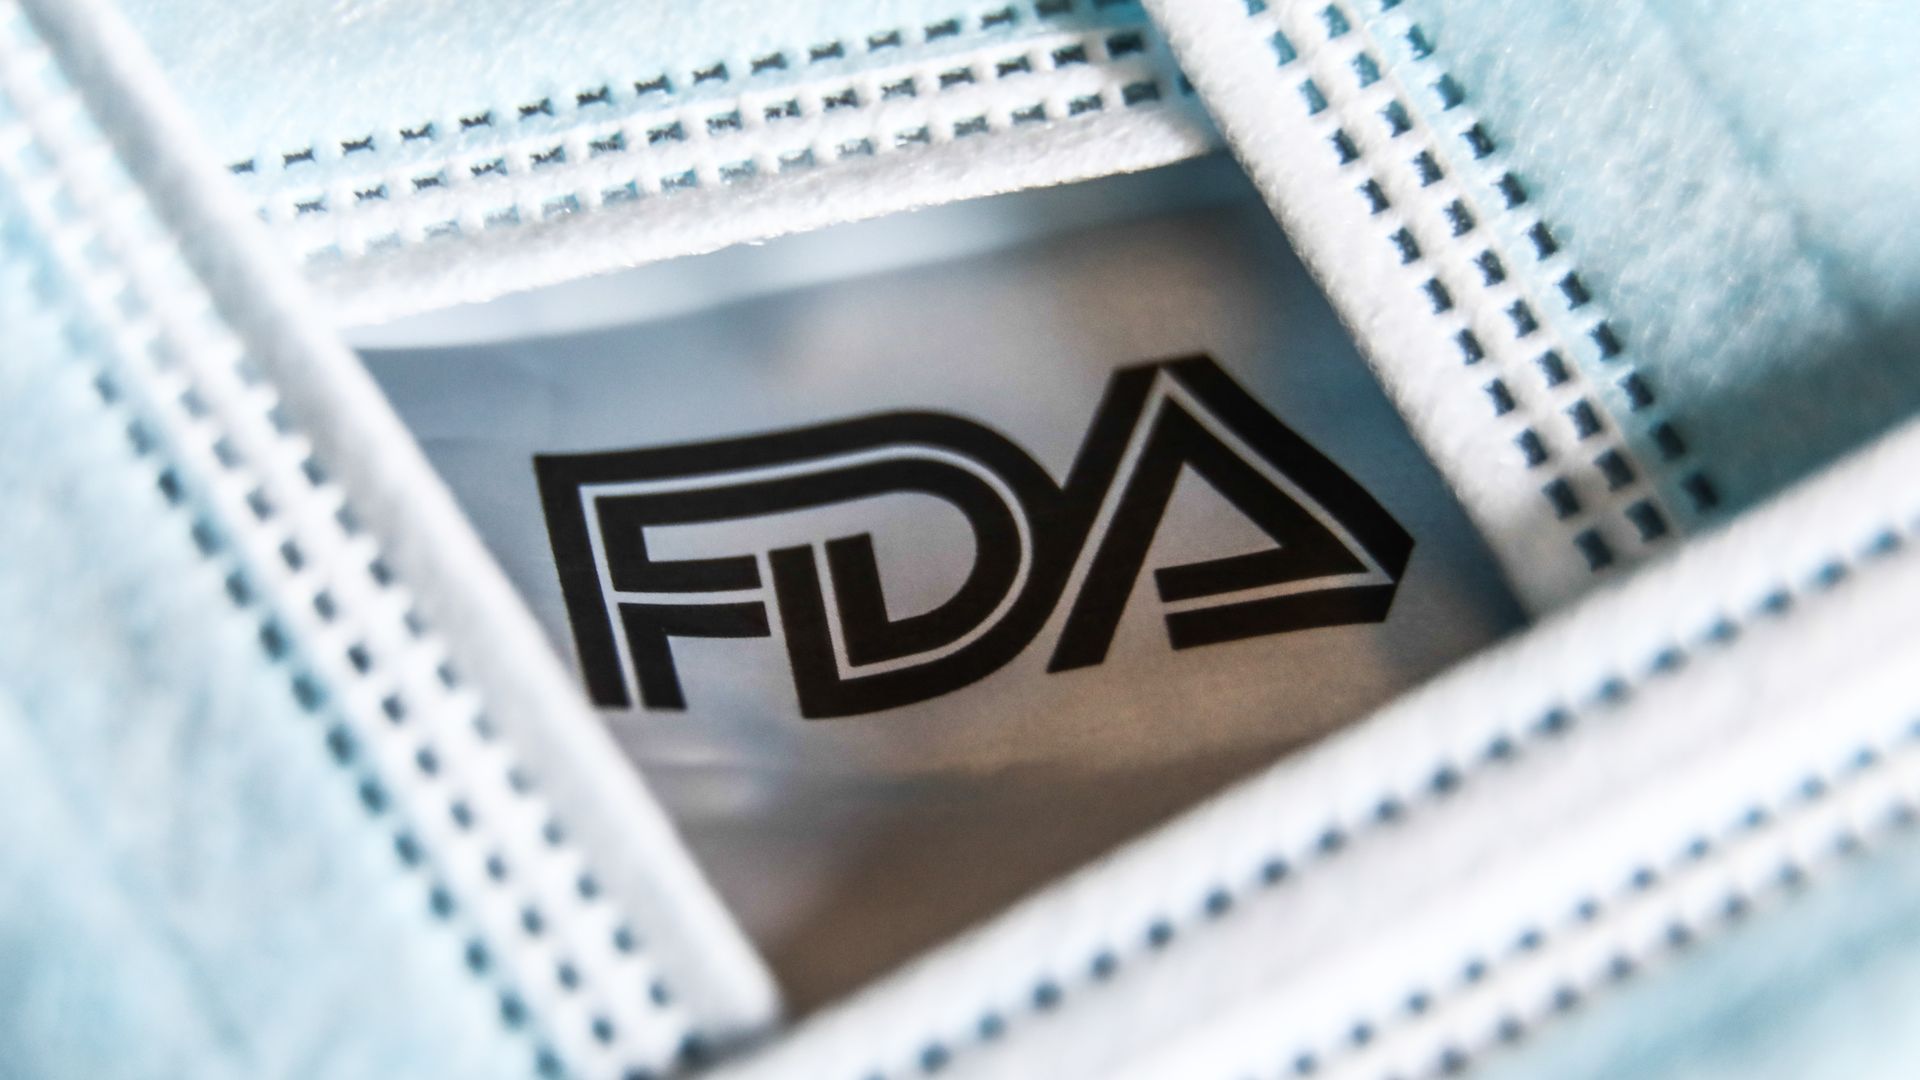 The FDA logo framed by face masks.